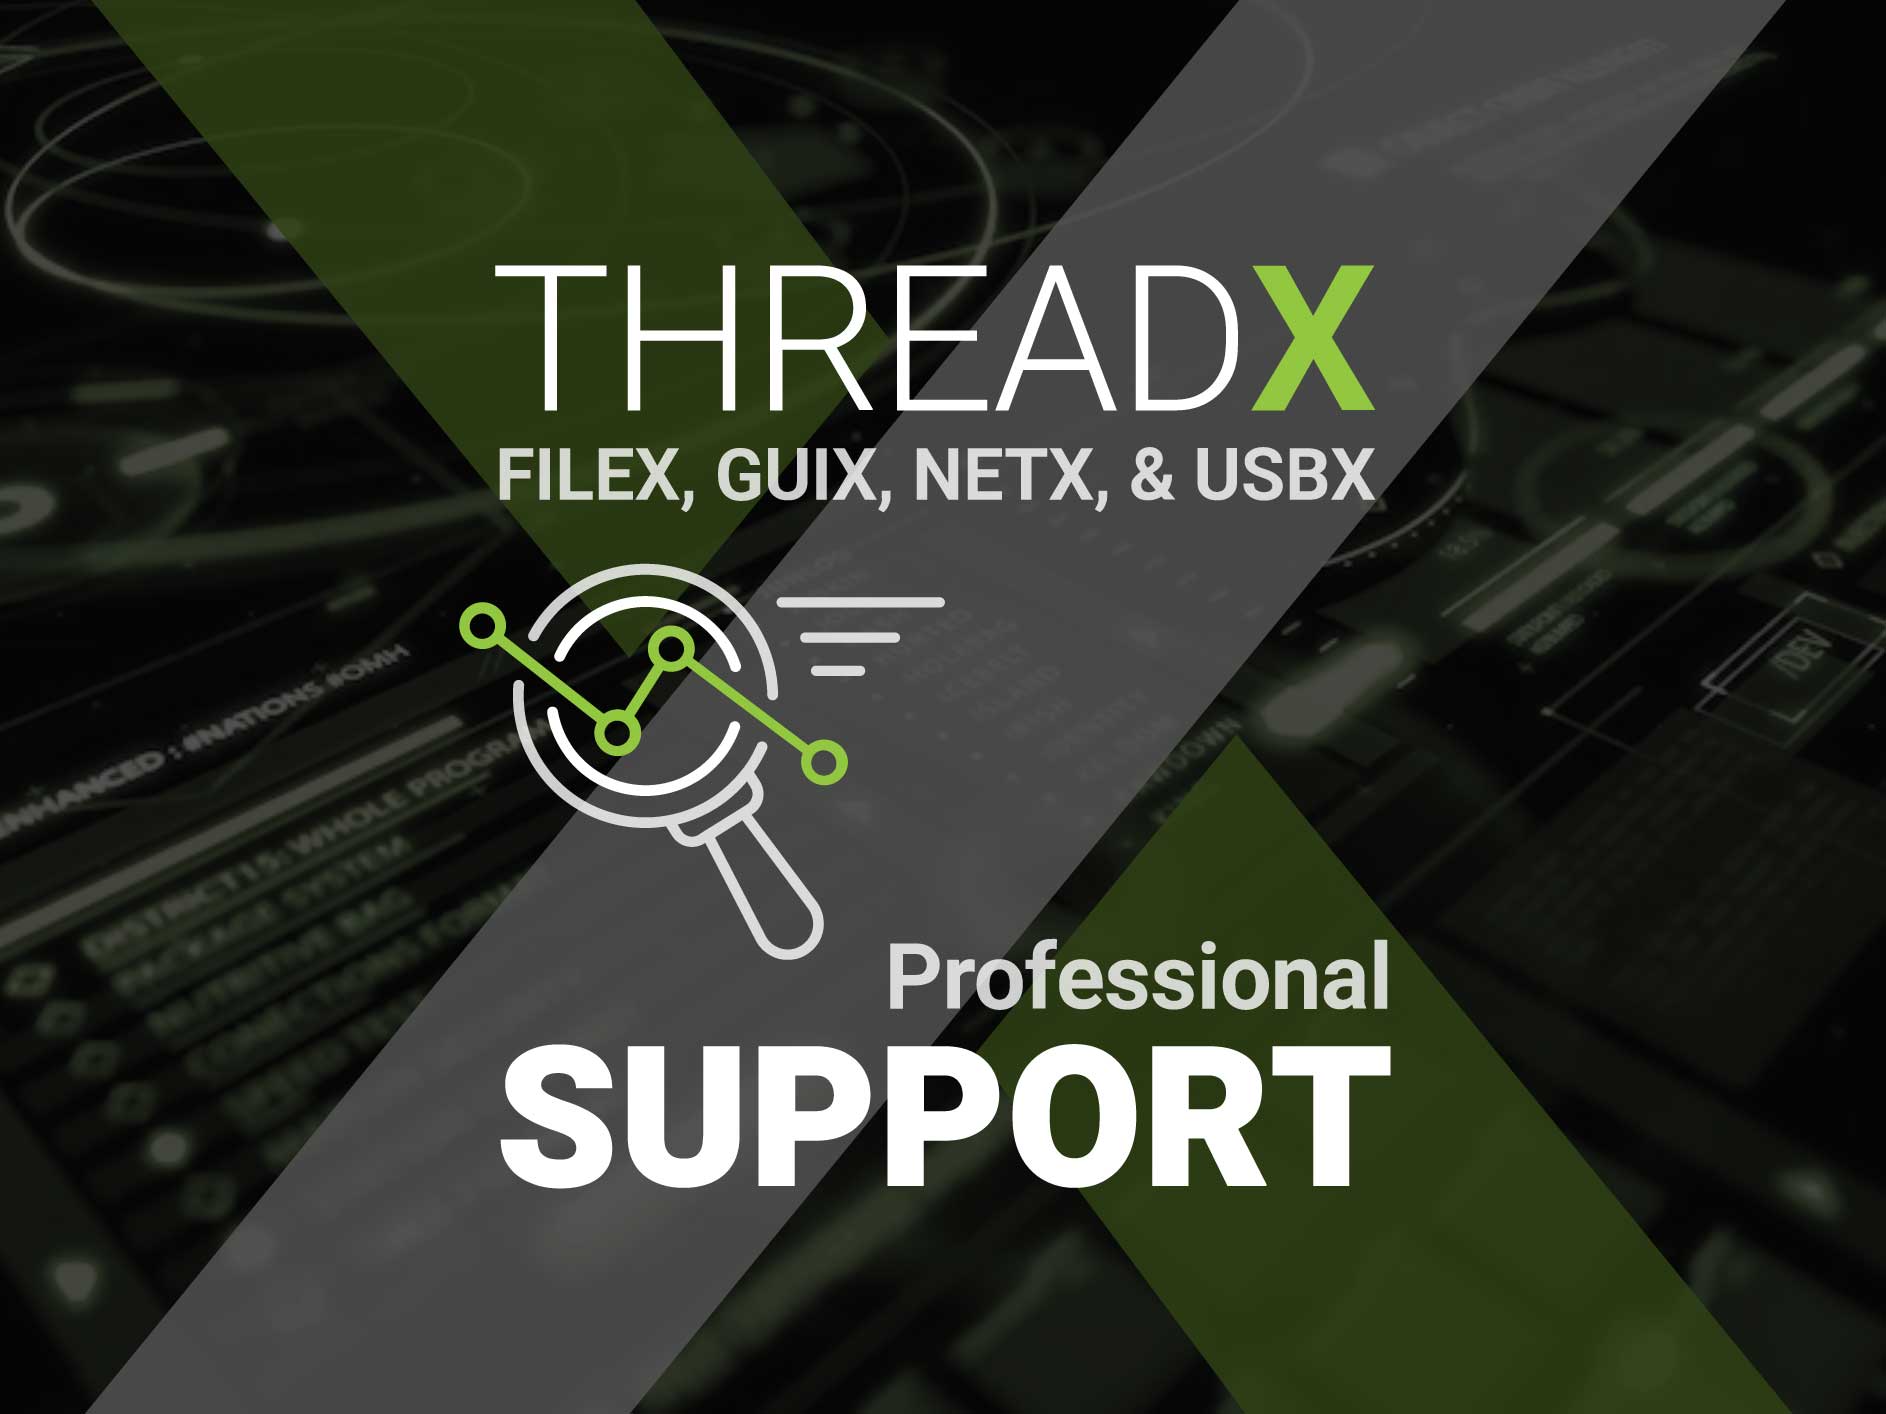 ThreadX professional support